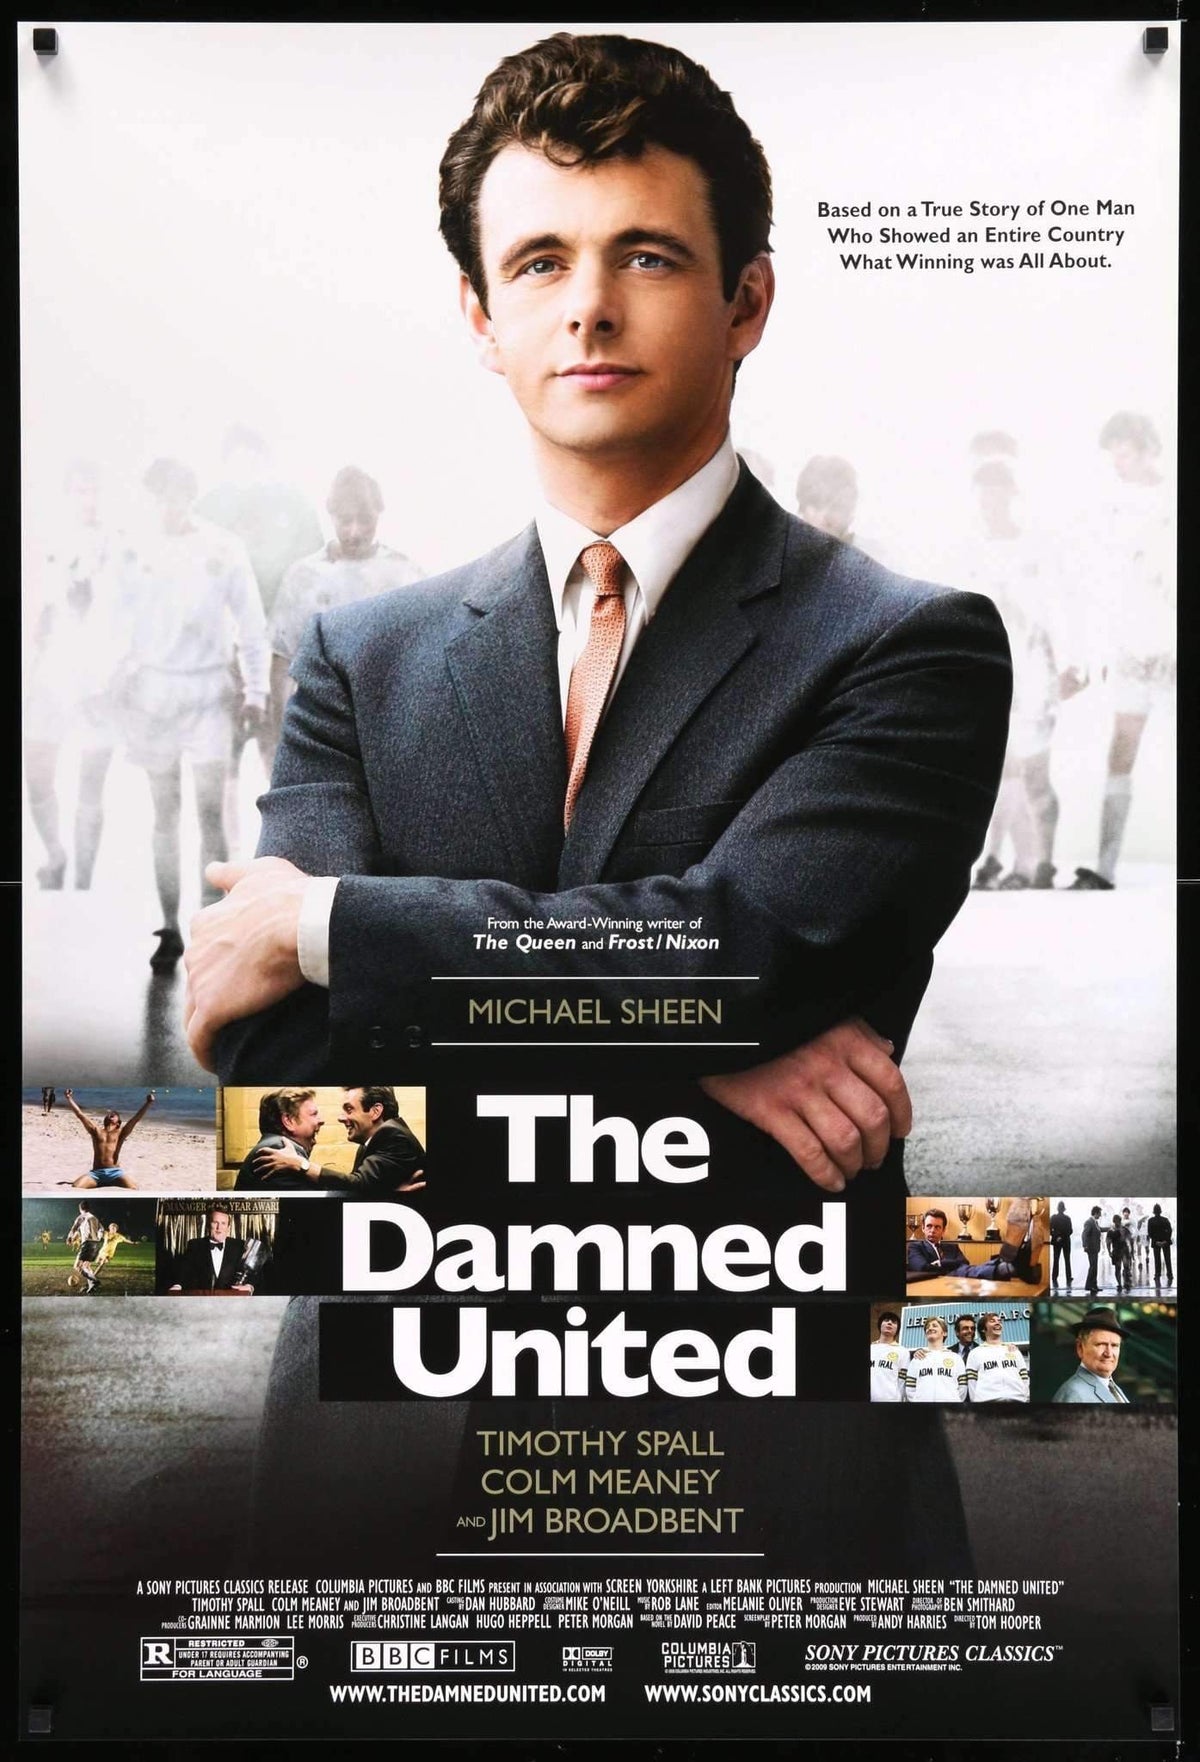 Damned United (2009) original movie poster for sale at Original Film Art